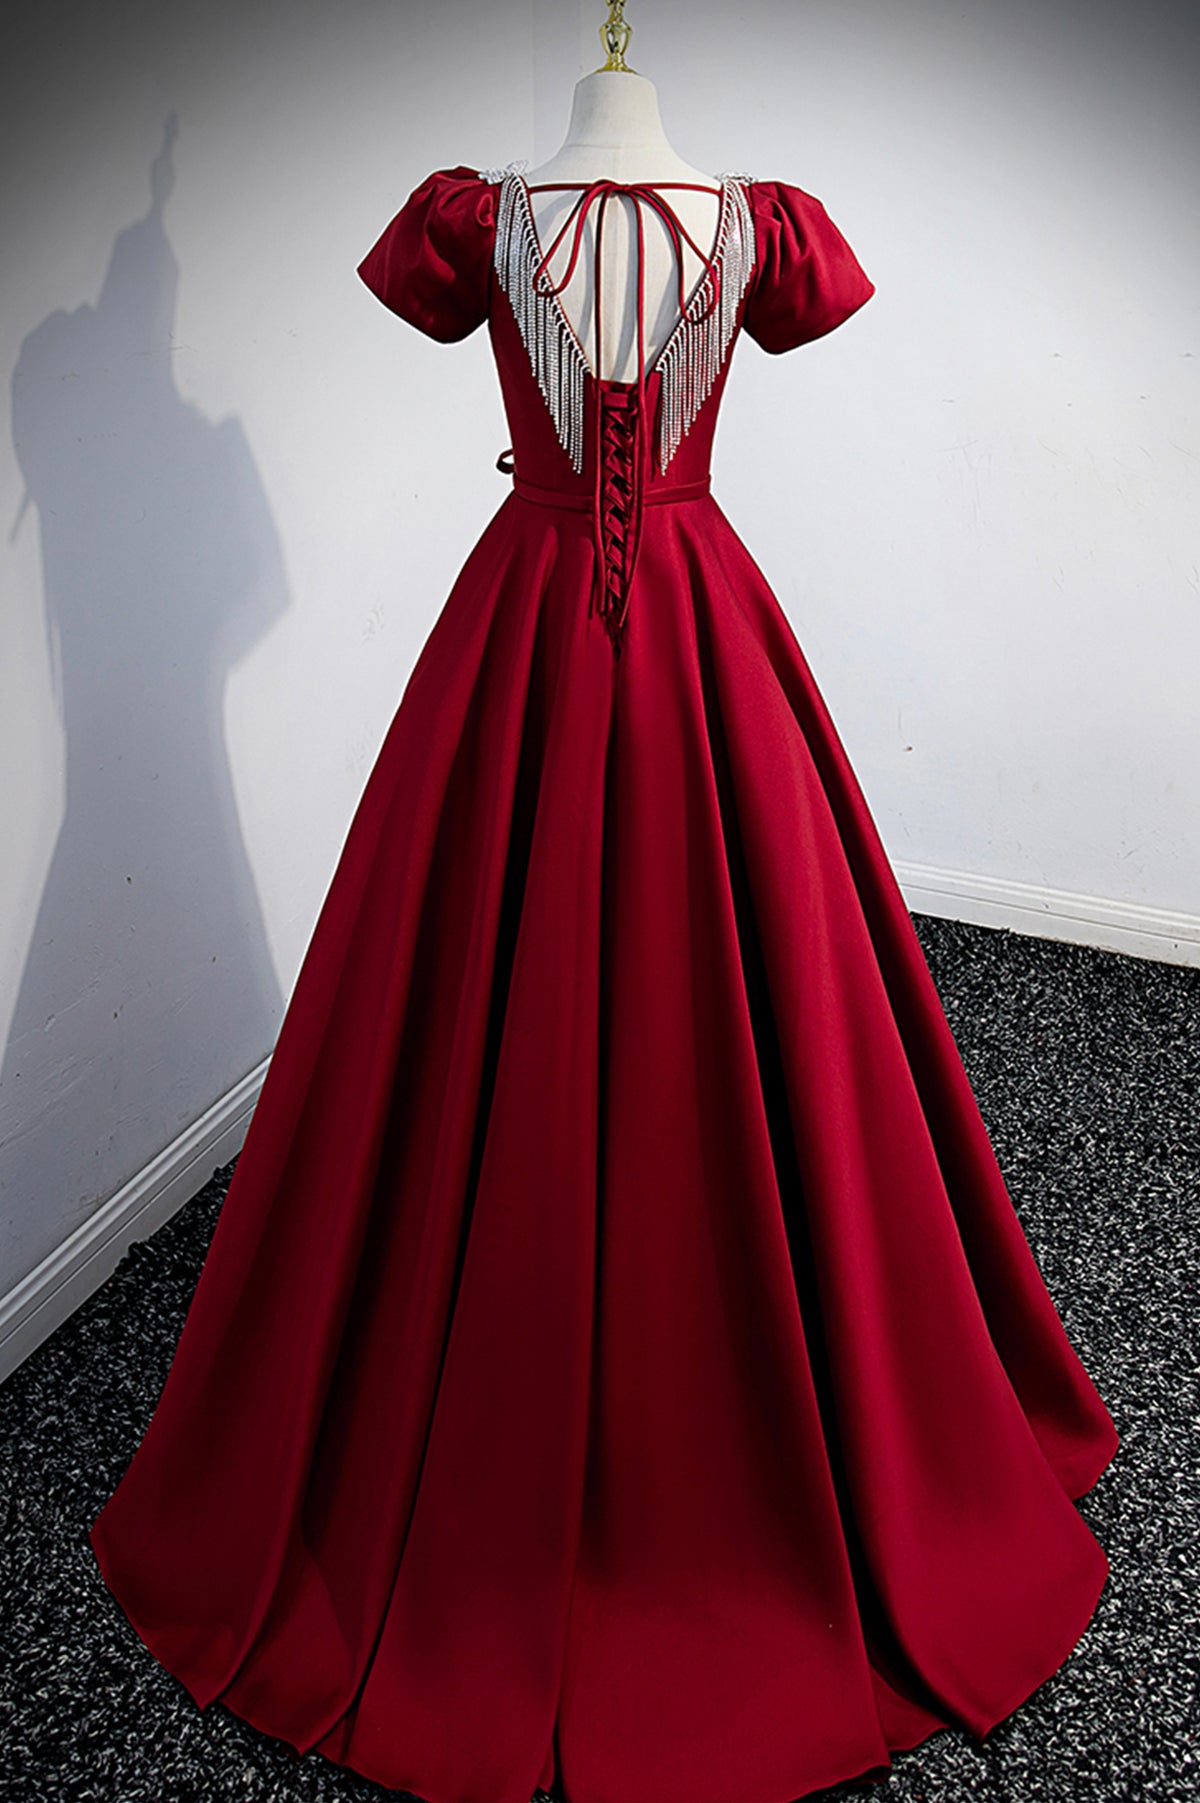 Burgundy Scoop Neckline Satin Long Prom Dress, Short Sleeve Evening Dress